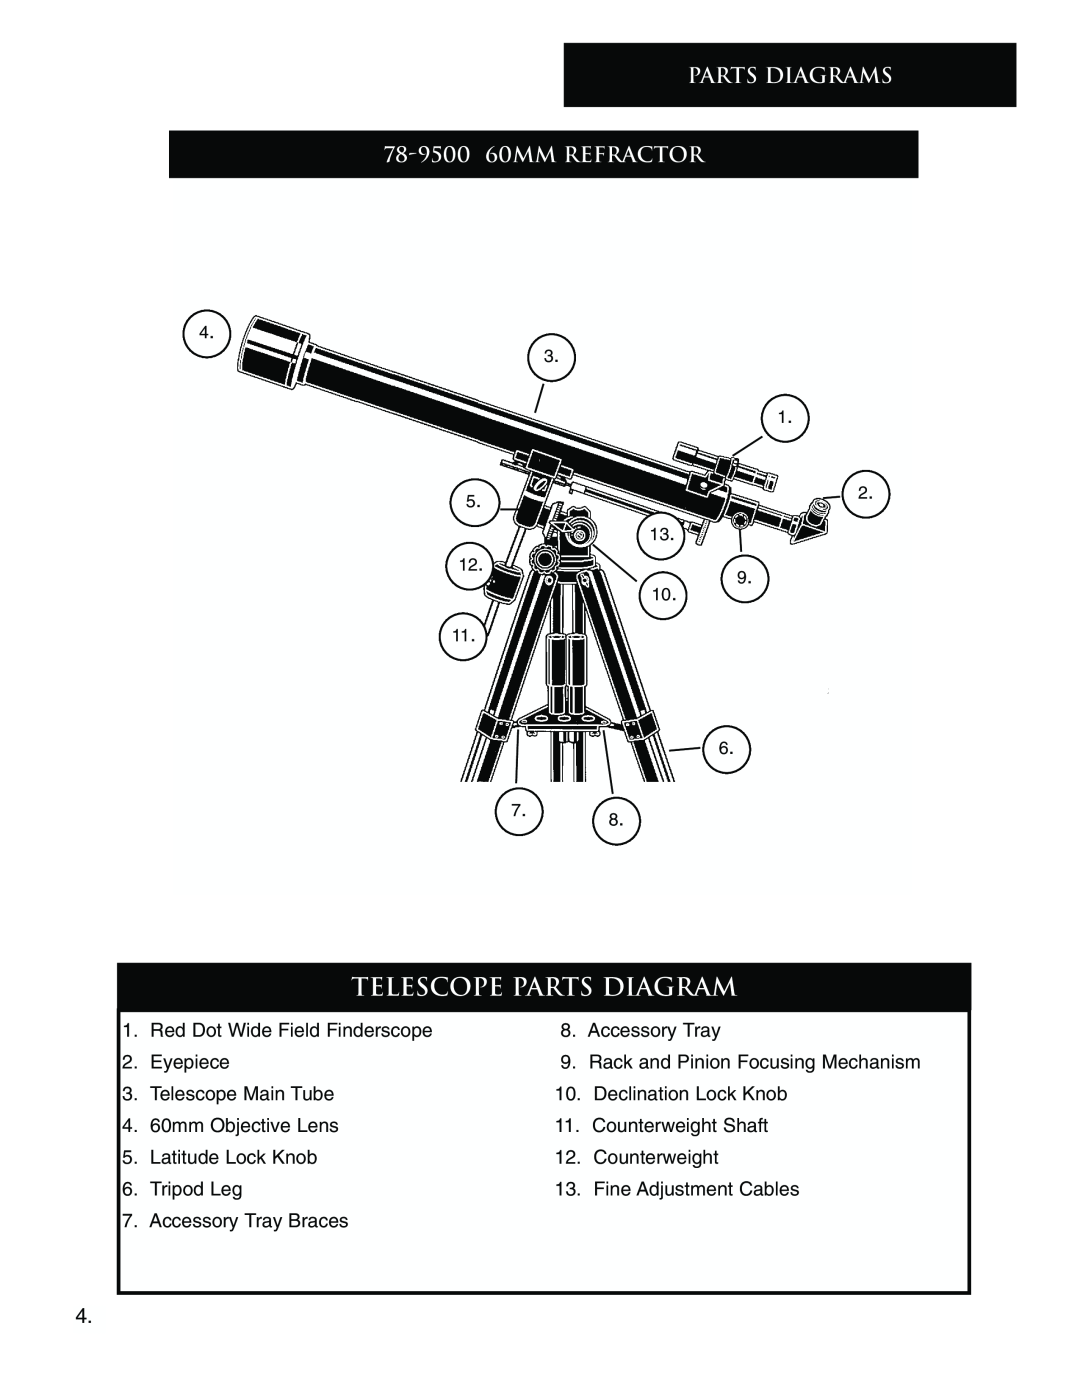 Bushnell instruction manual PARTS DIAGRAMS 78-950060MM REFRACTOR, Telescope Parts Diagram 